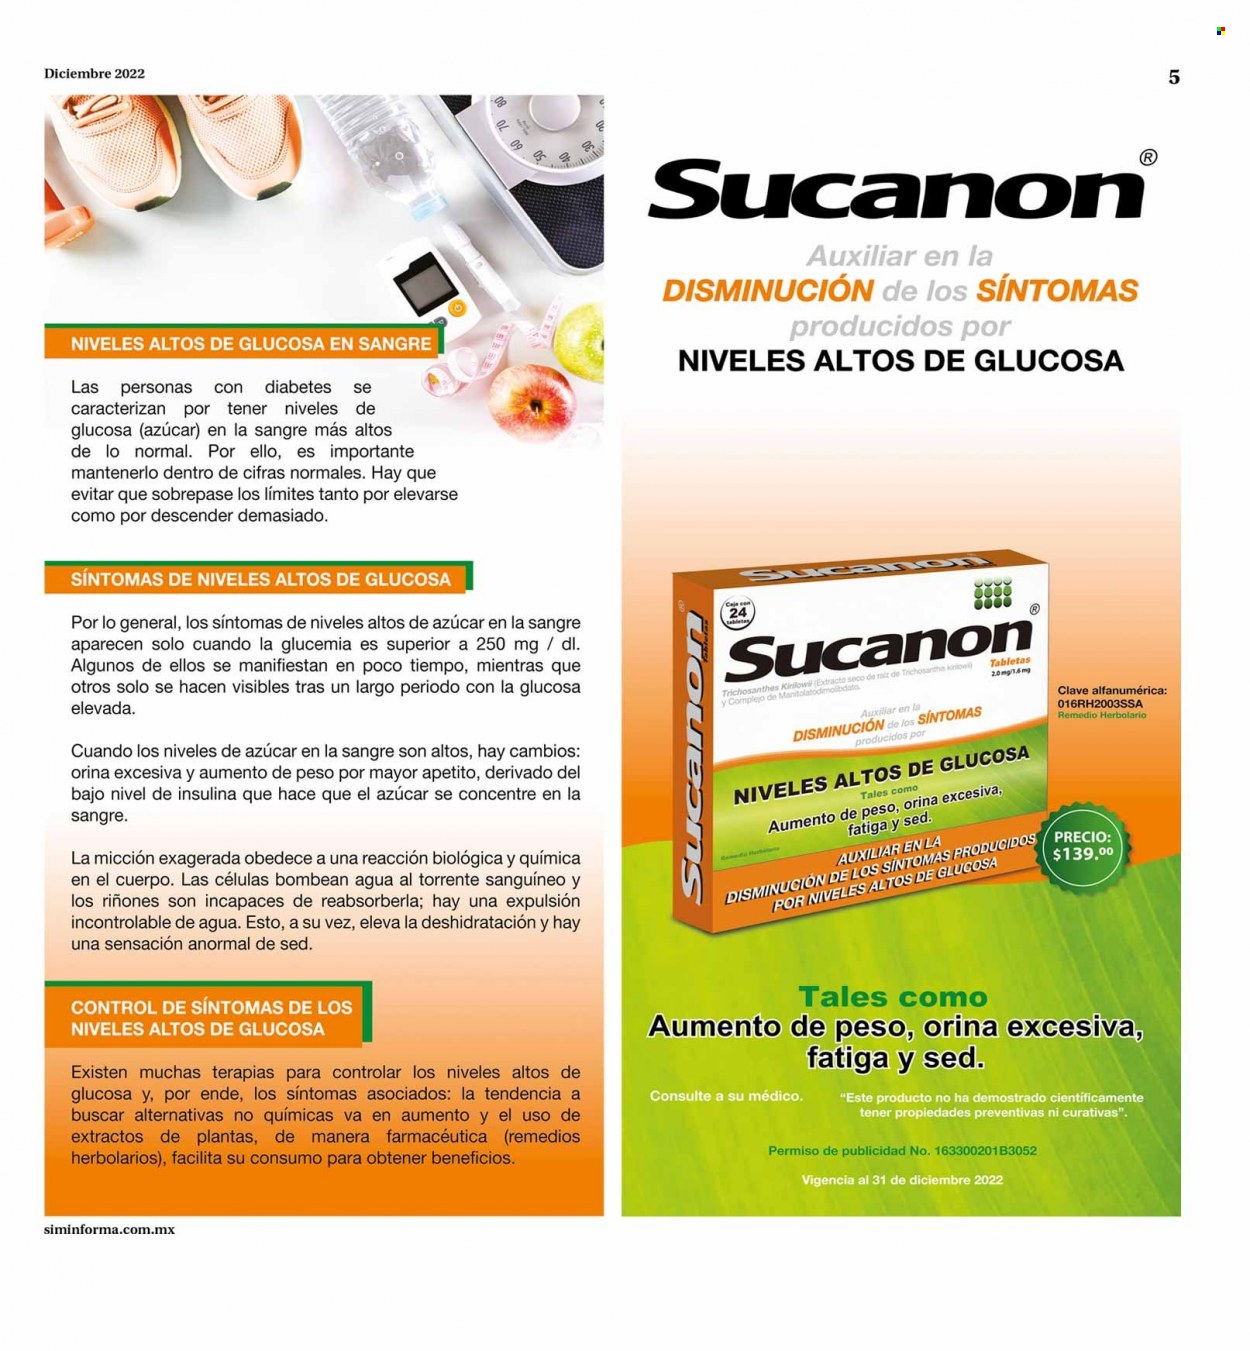 Catálogo Farmacias Similares - 1.12.2022 - 31.12.2022.